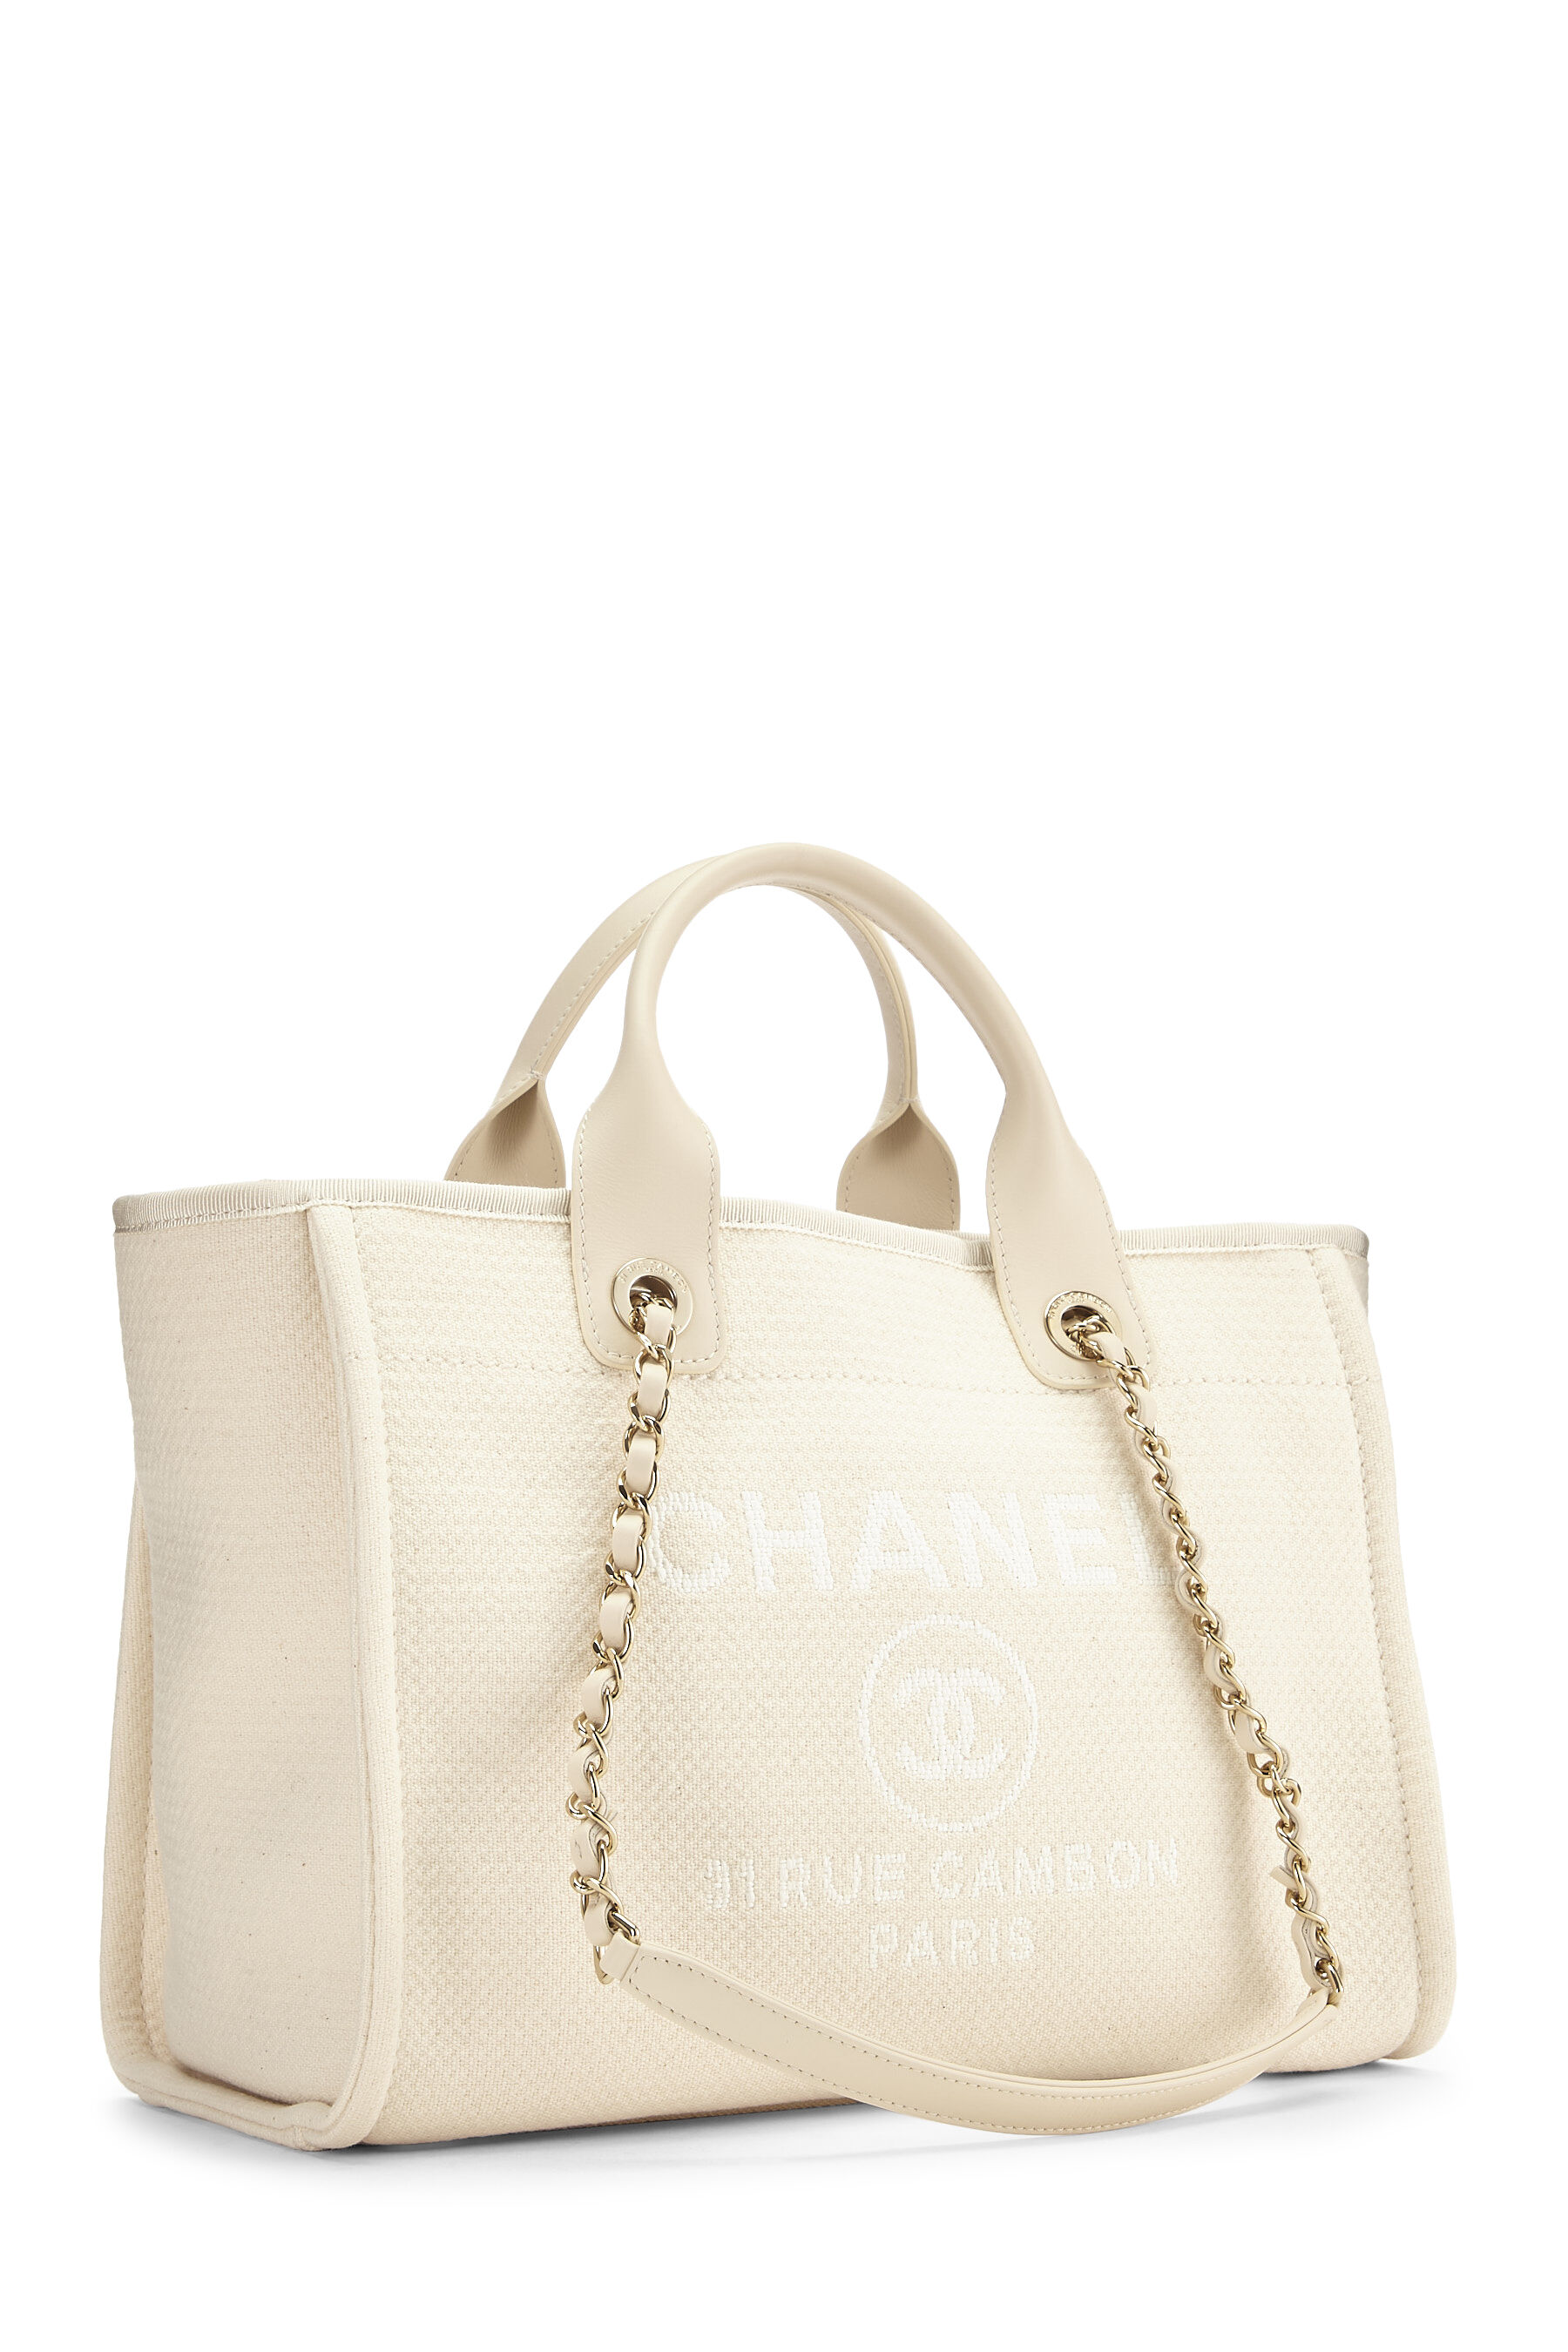 chanel white canvas tote bag